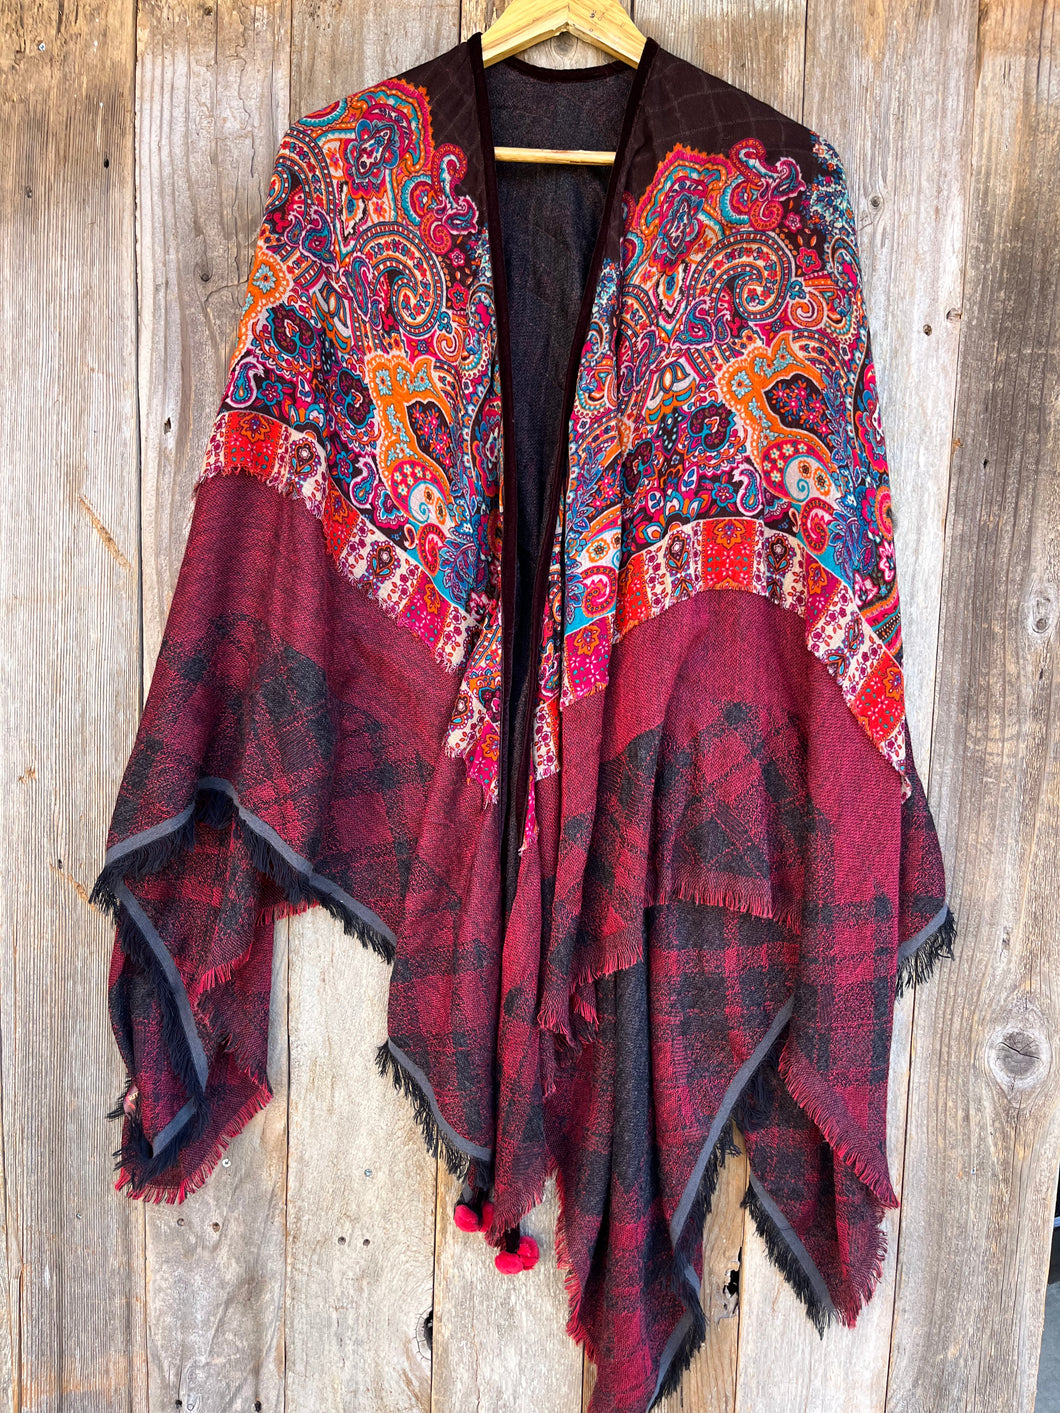 Handmade shawl with velvet trim